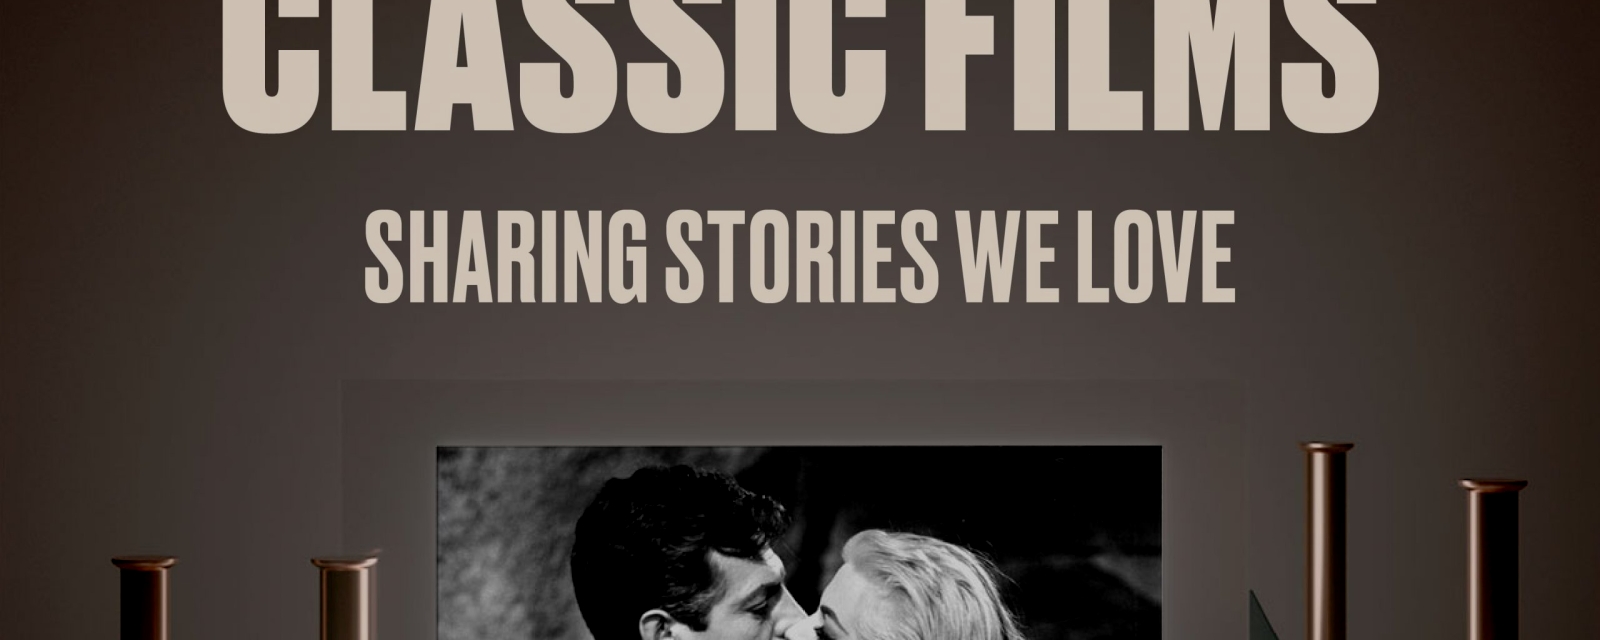 a_season_of_classic_films